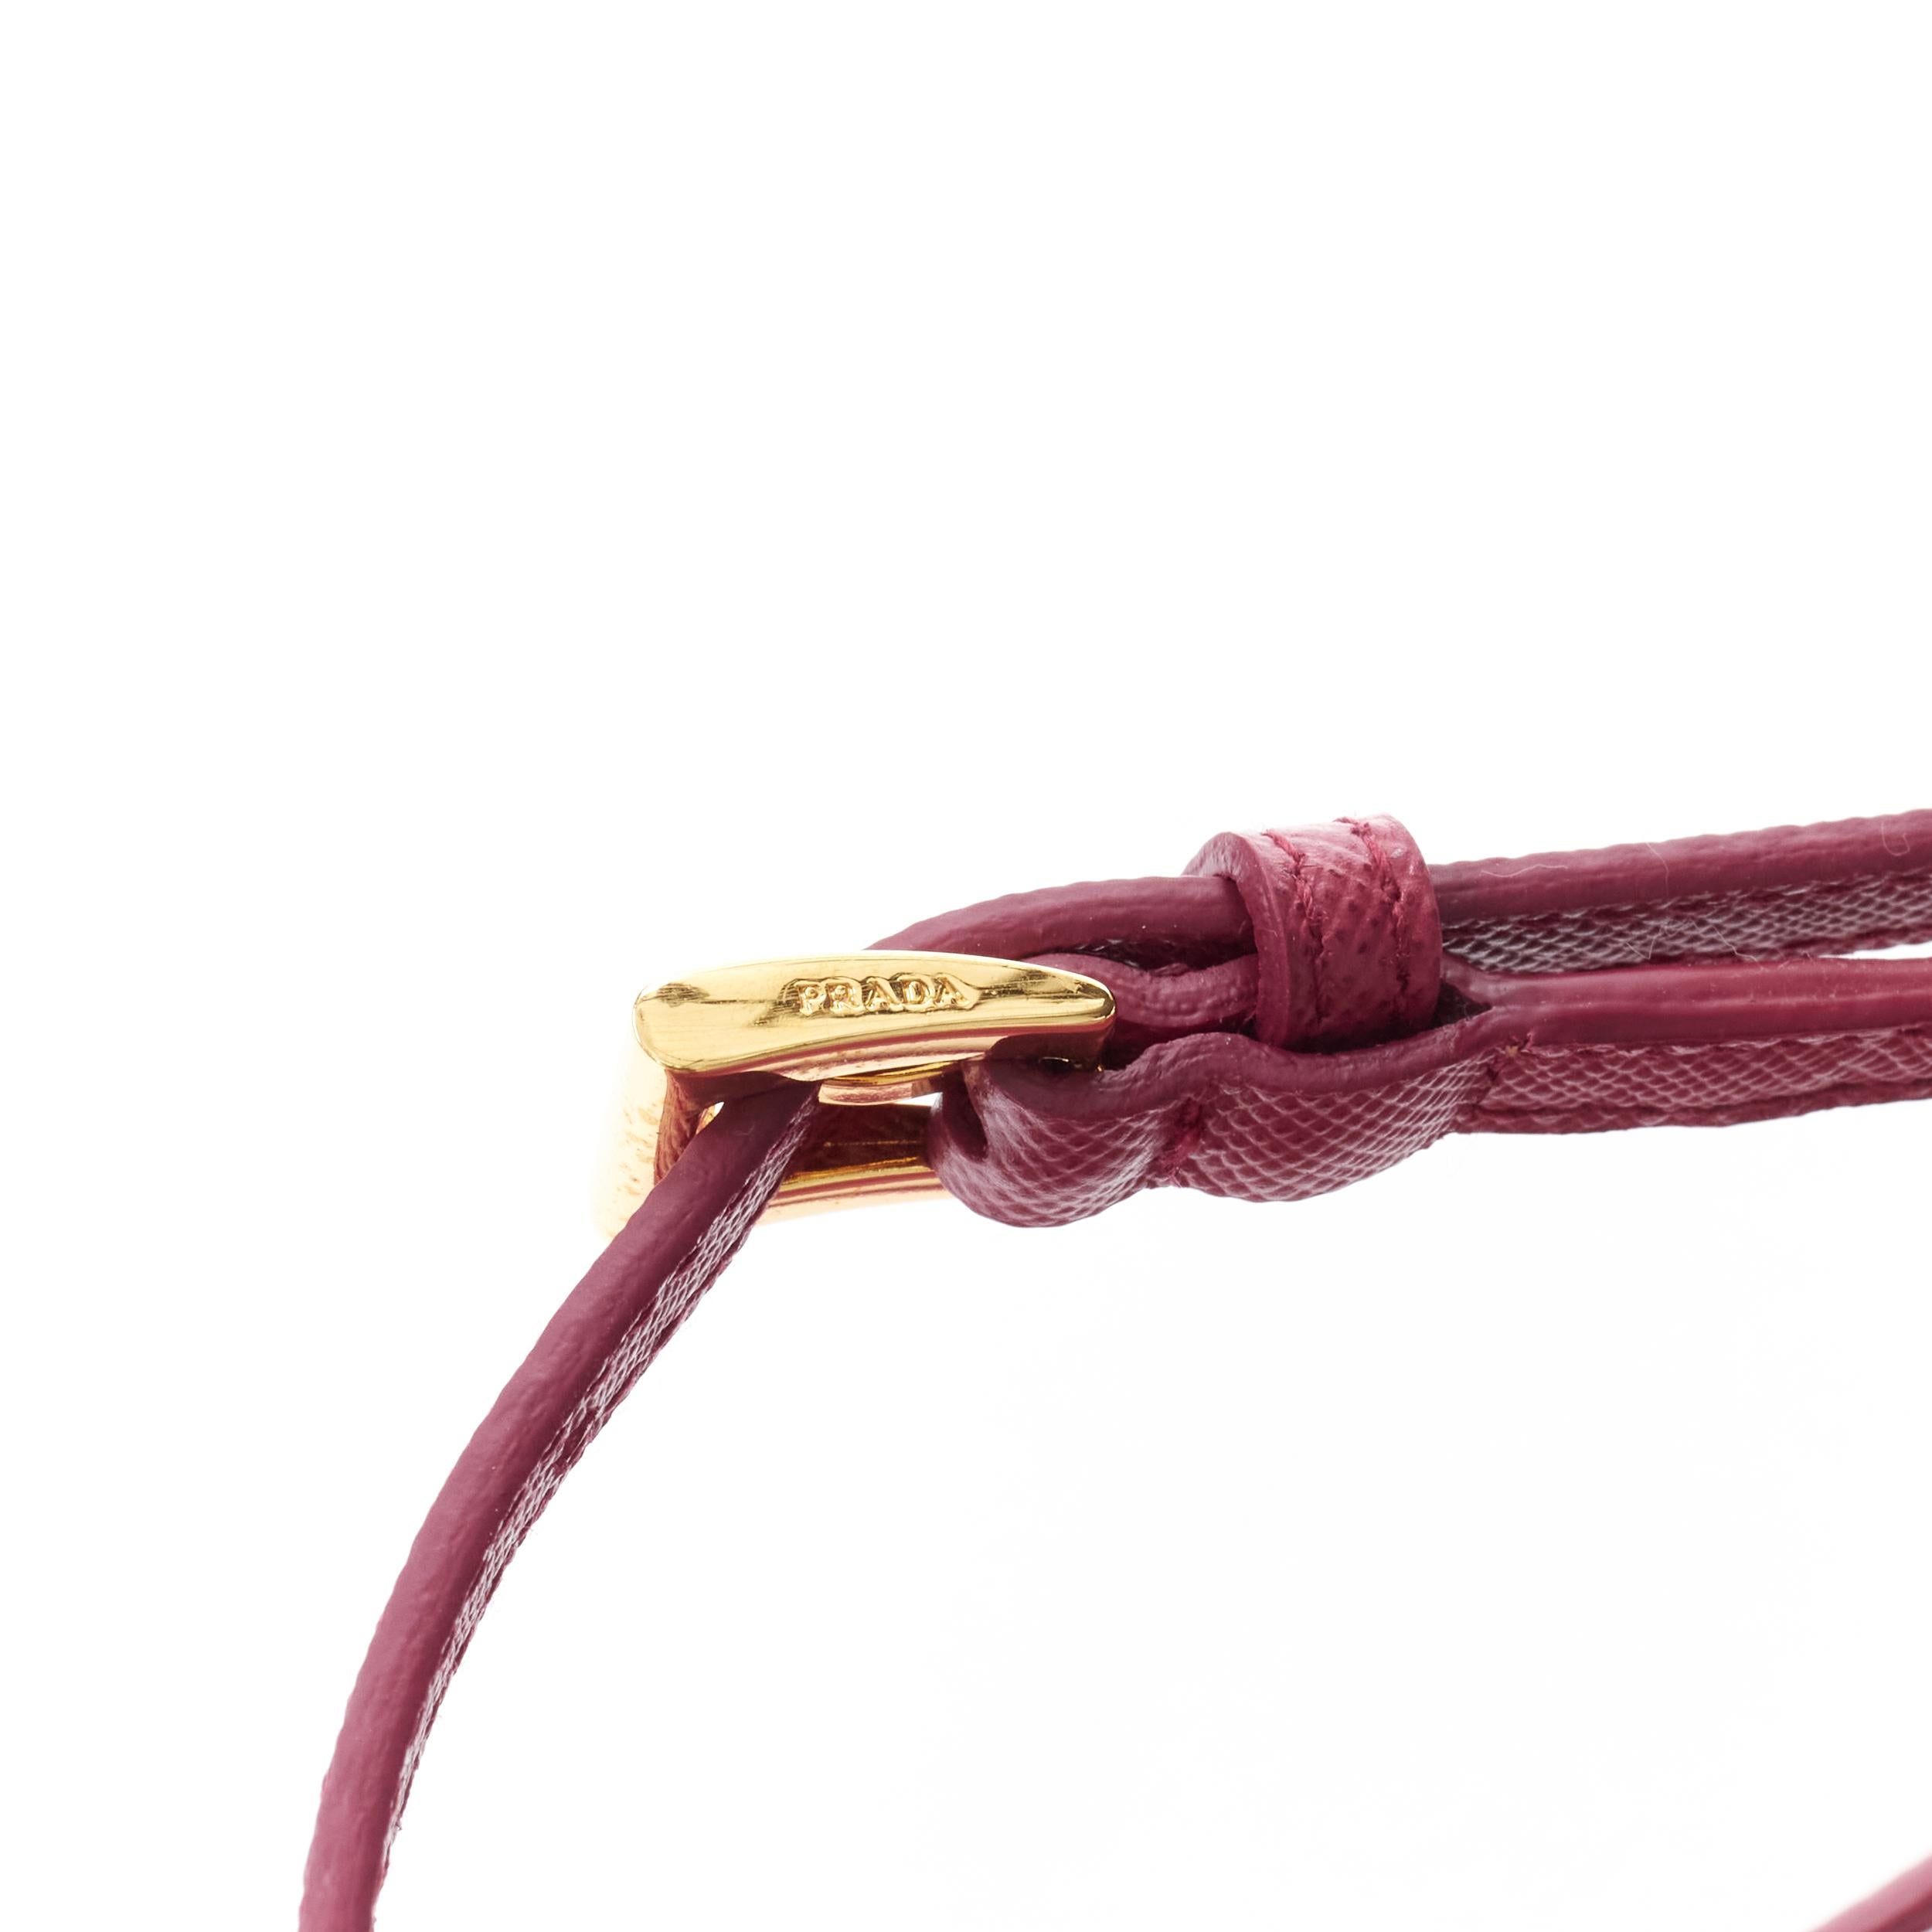 Women's new PRADA pink diamond envelop gold logo wallet on chain crossbody clutch bag